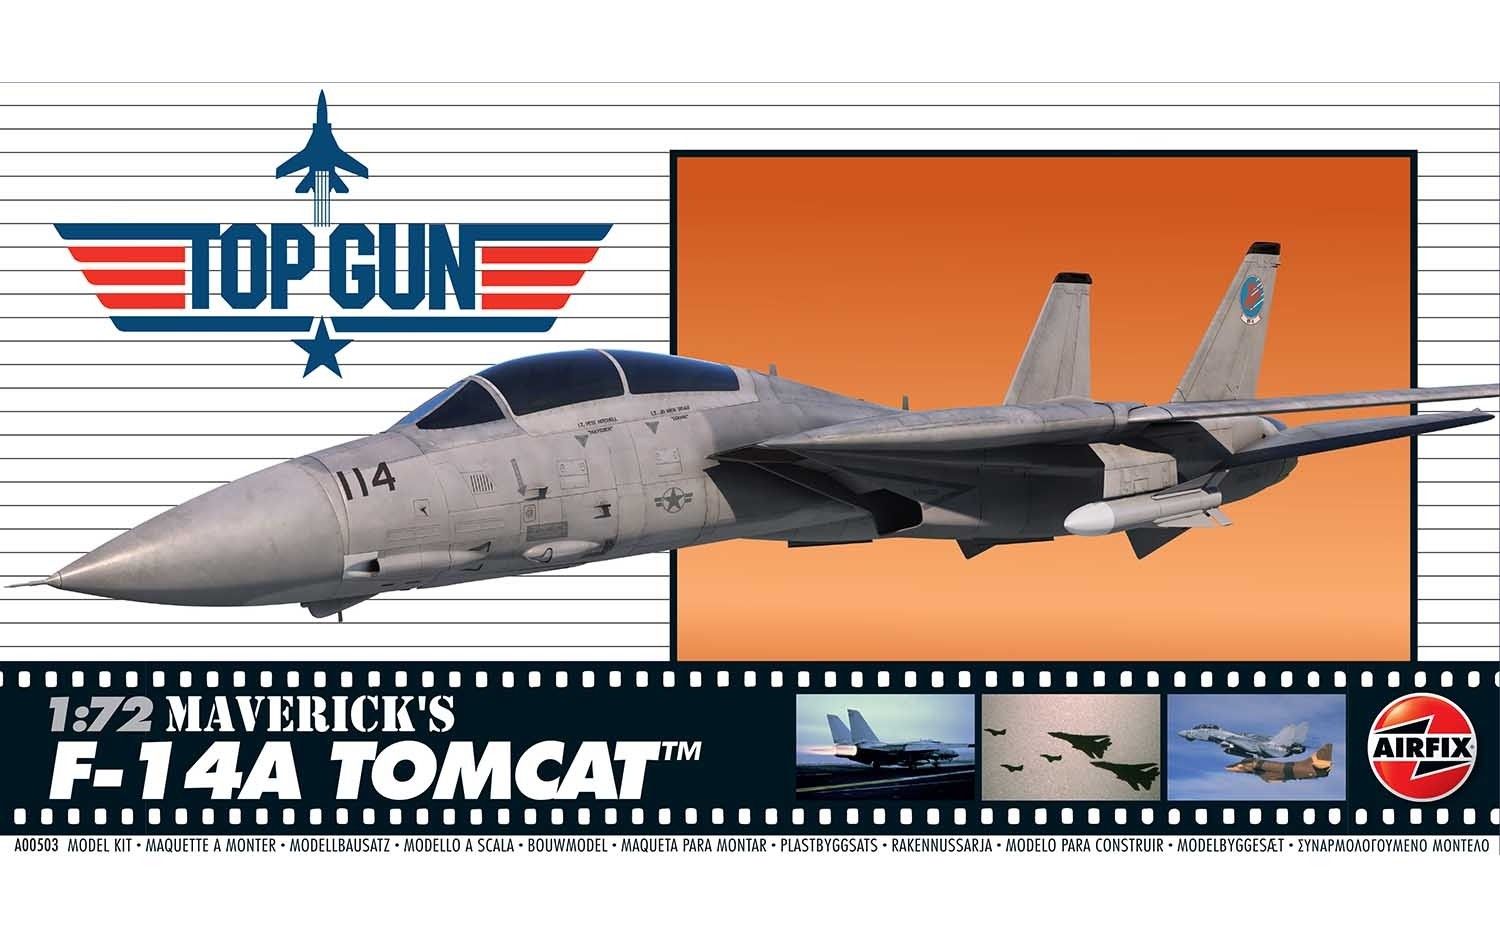  Airfix Top Gun Maverick's F-14A Tomcat